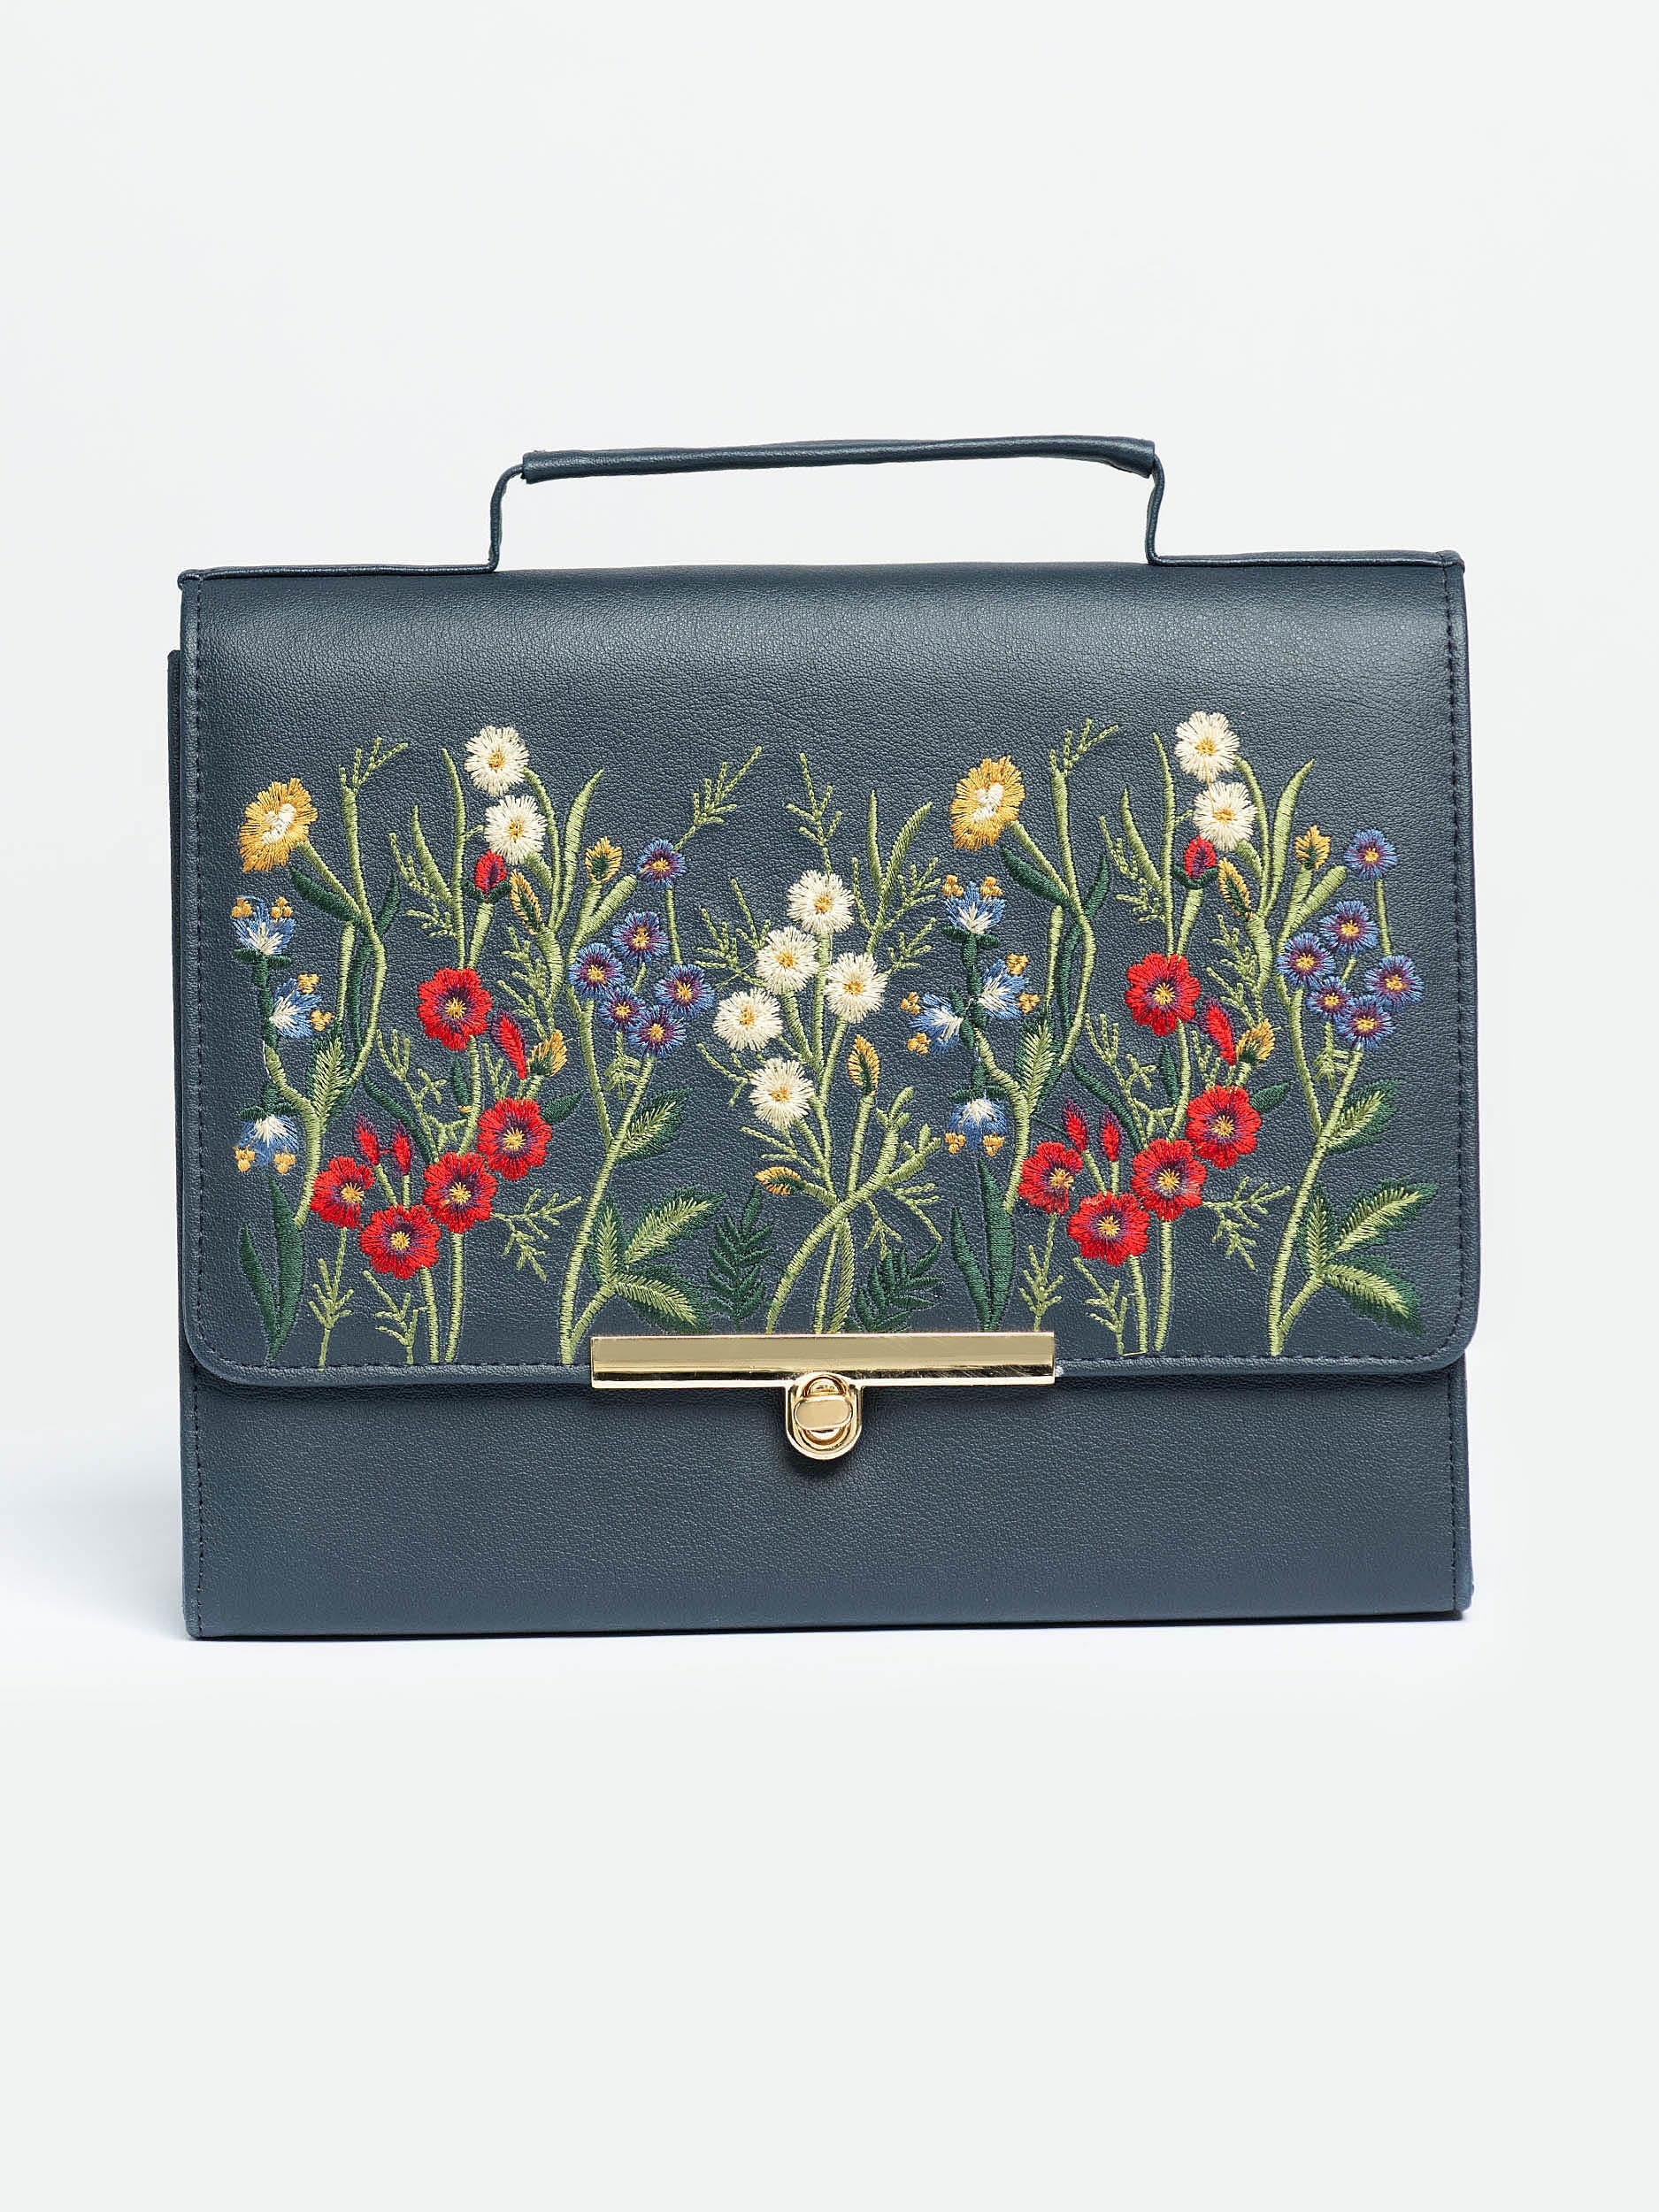 Floral Embroidery Handbag